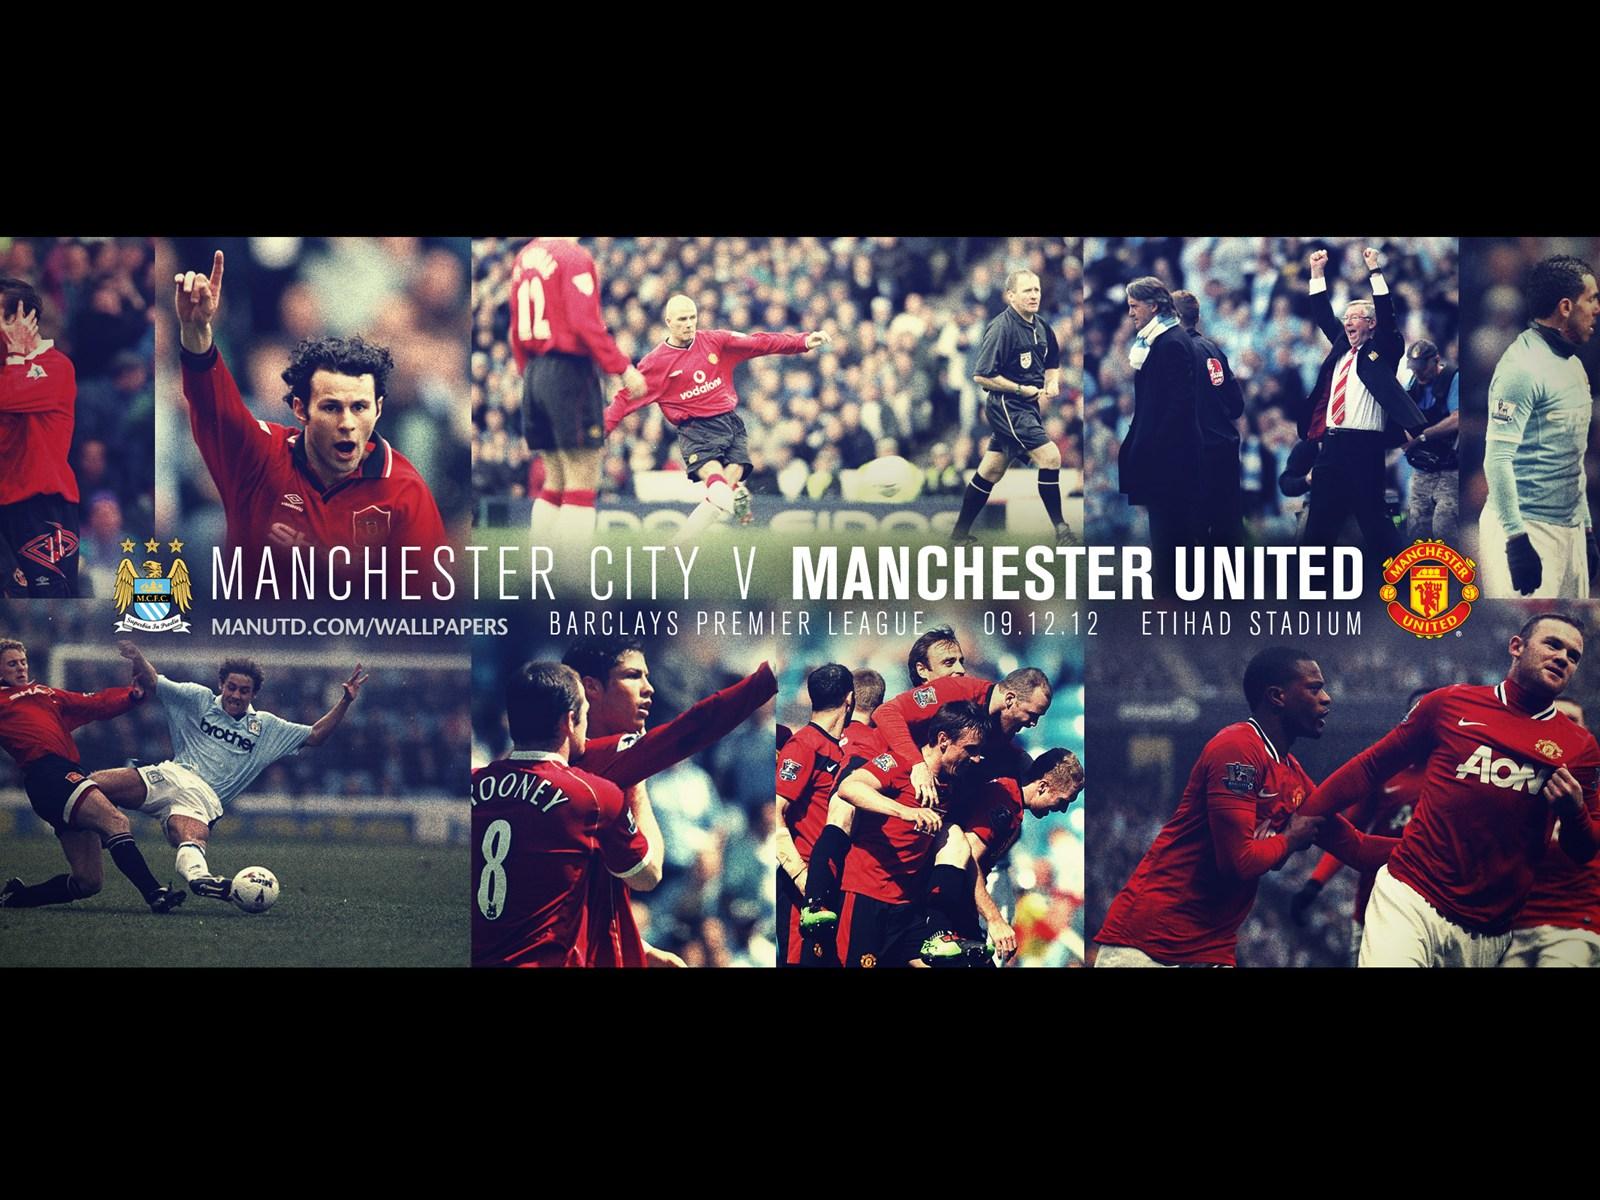 Derby manchester city vs manchester united wallpaper. Manchester